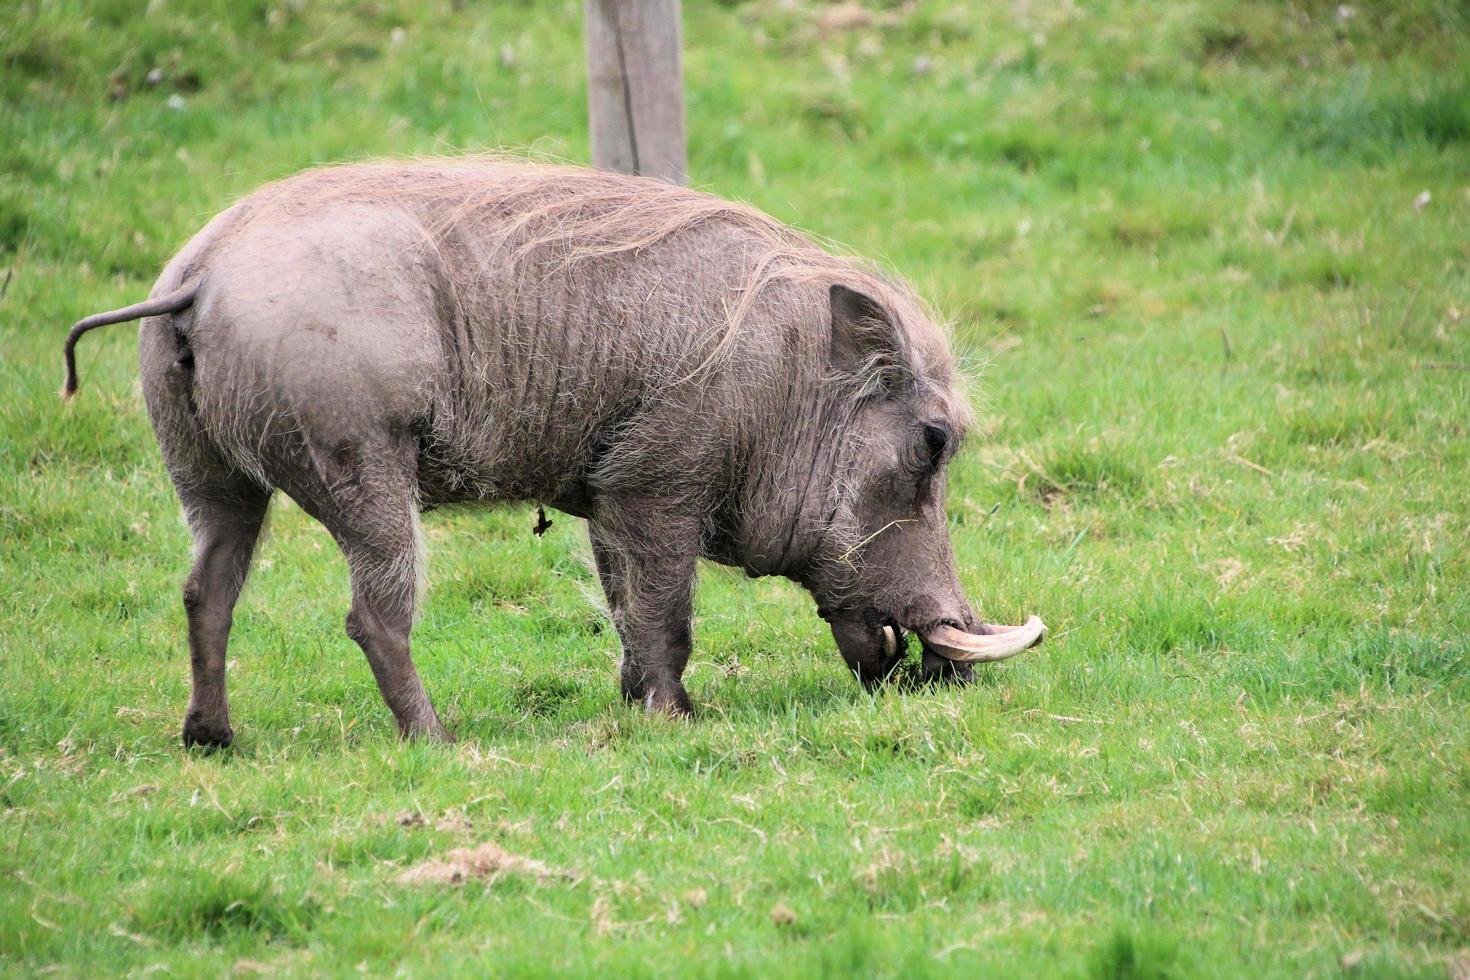 A view of a Wart Hog photo